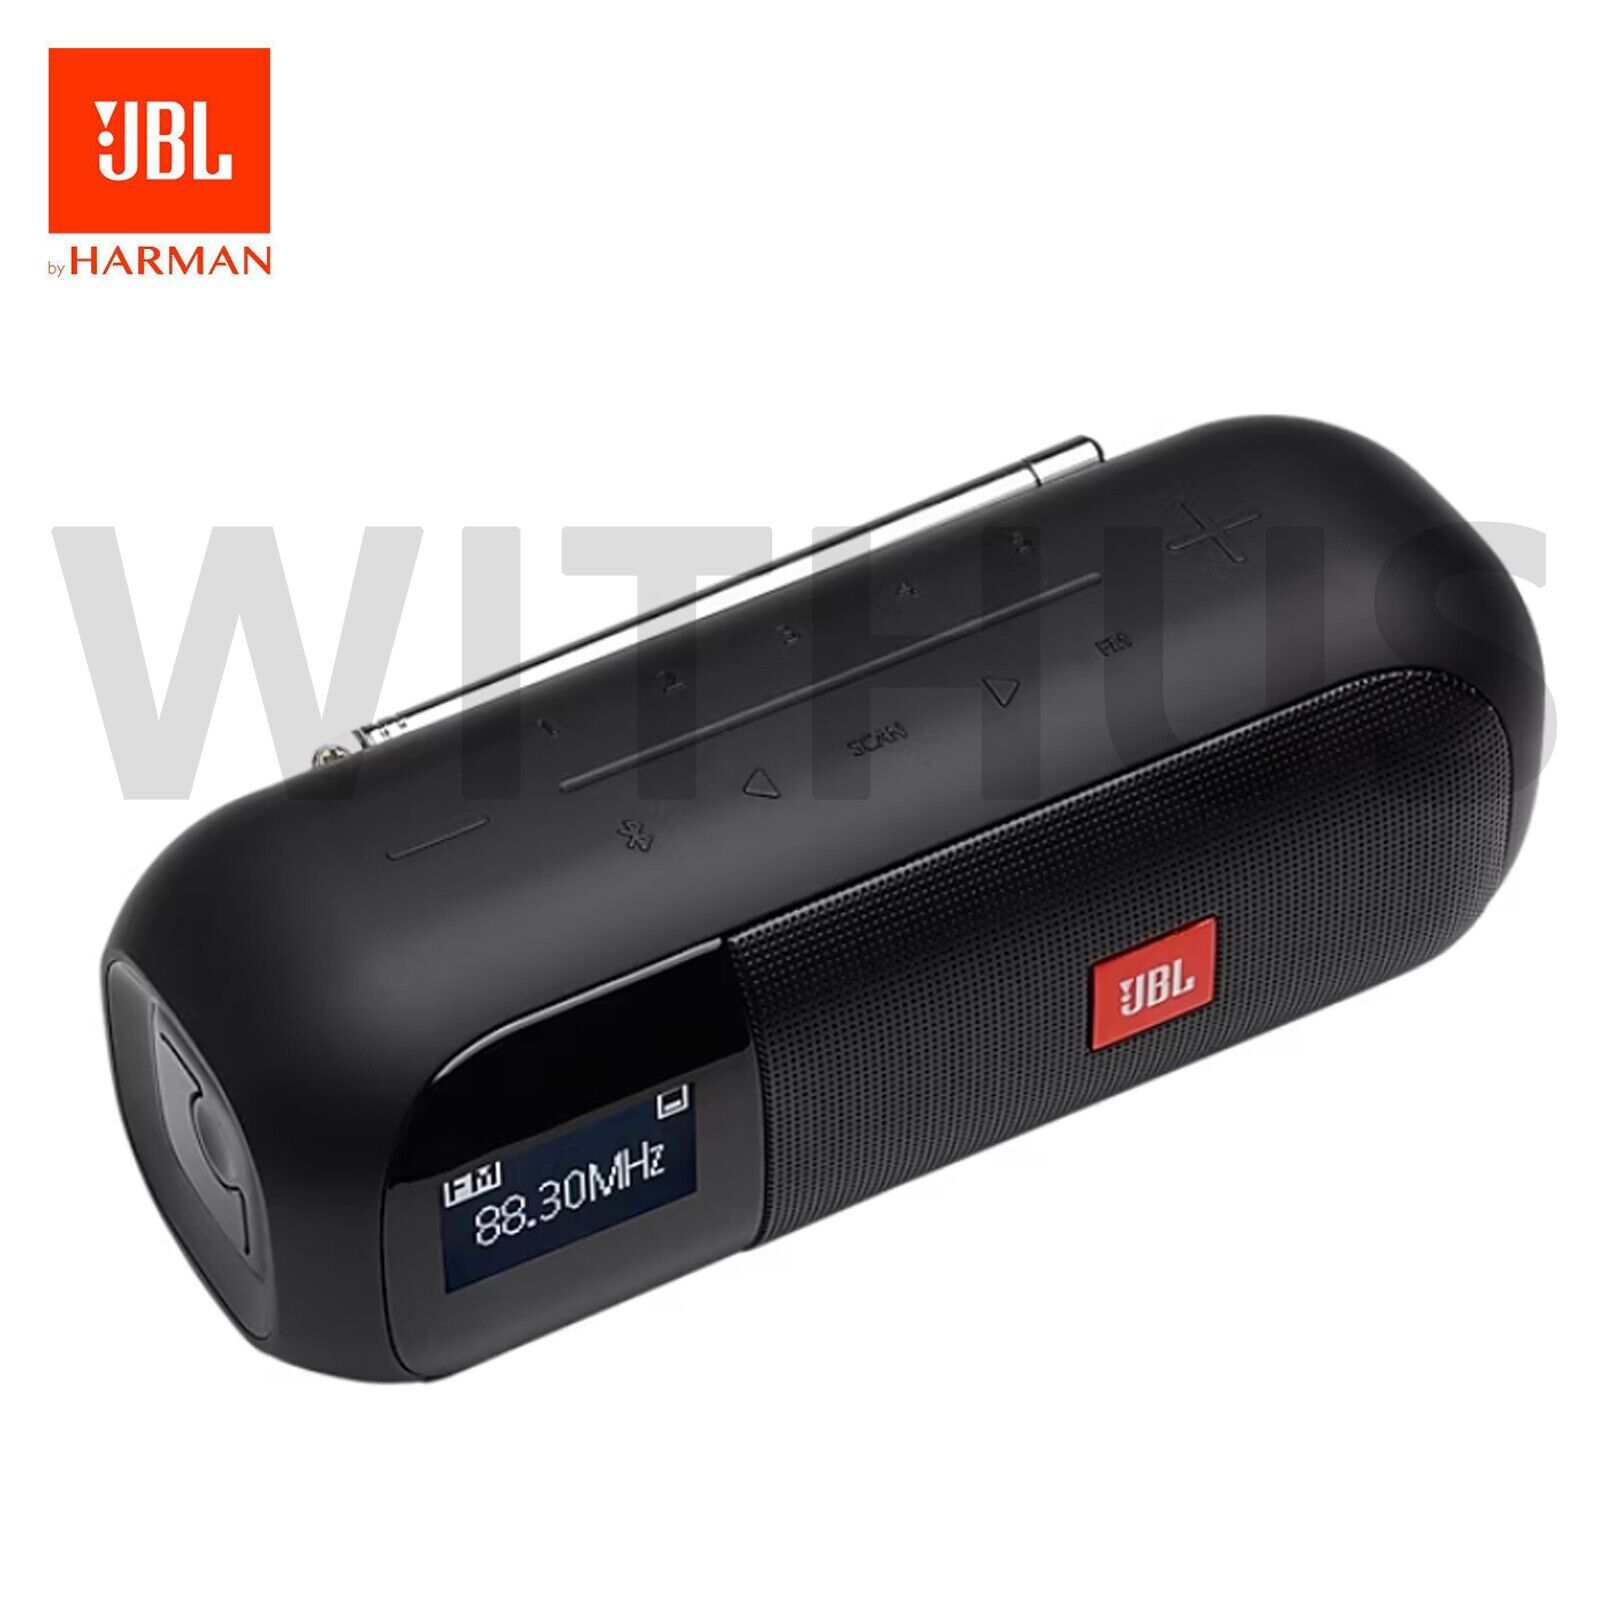 JBL TUNER 2 FM Portable FM Radio & Bluetooth Speaker Black